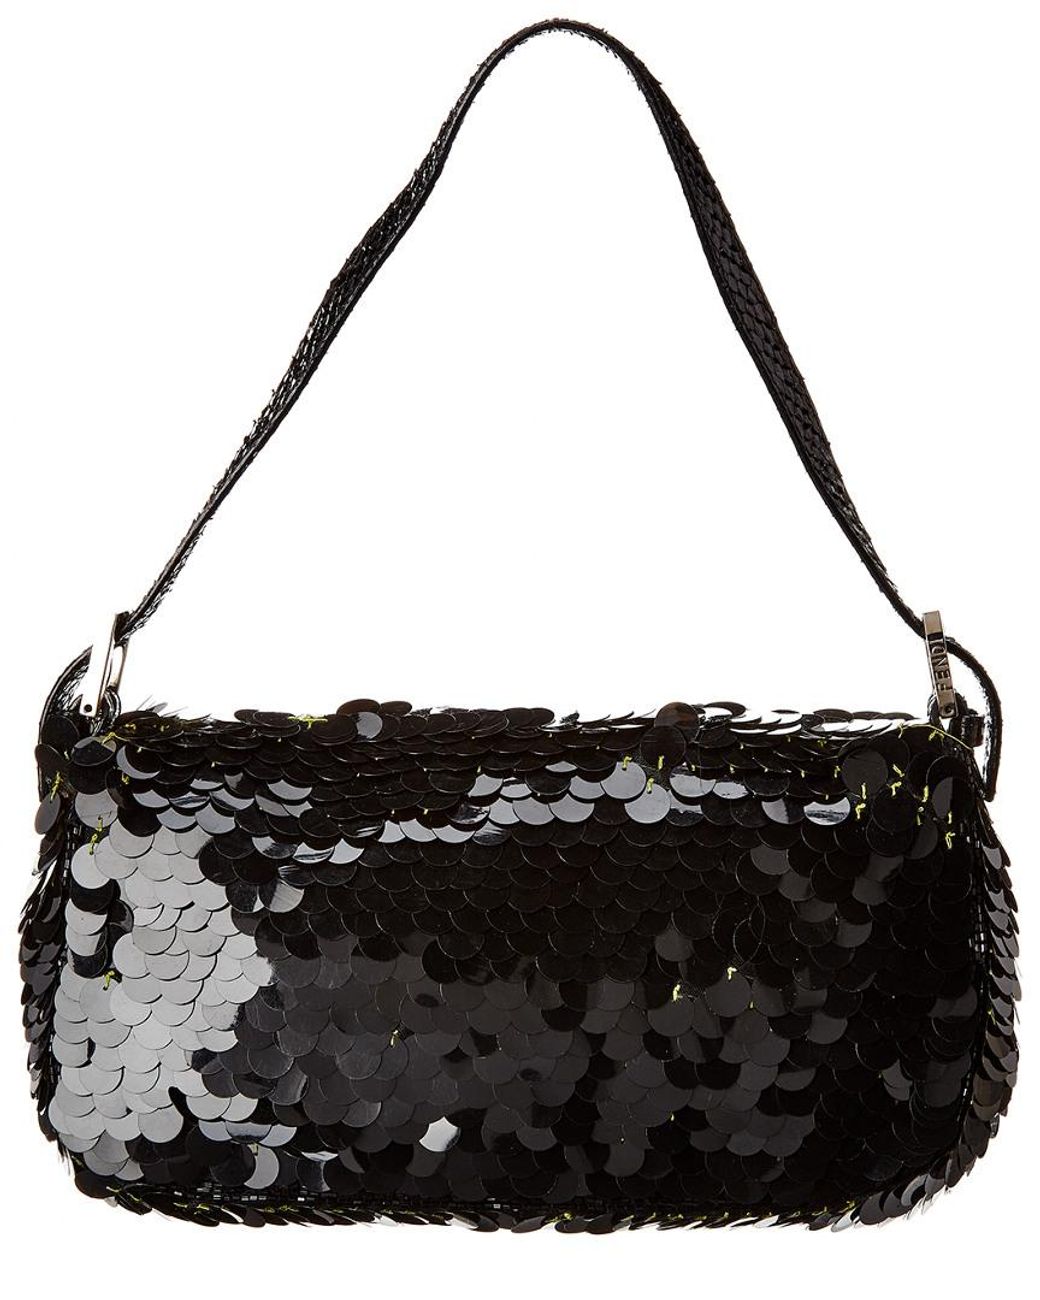 Fendi Black Sequin Baguette Bag | Lyst